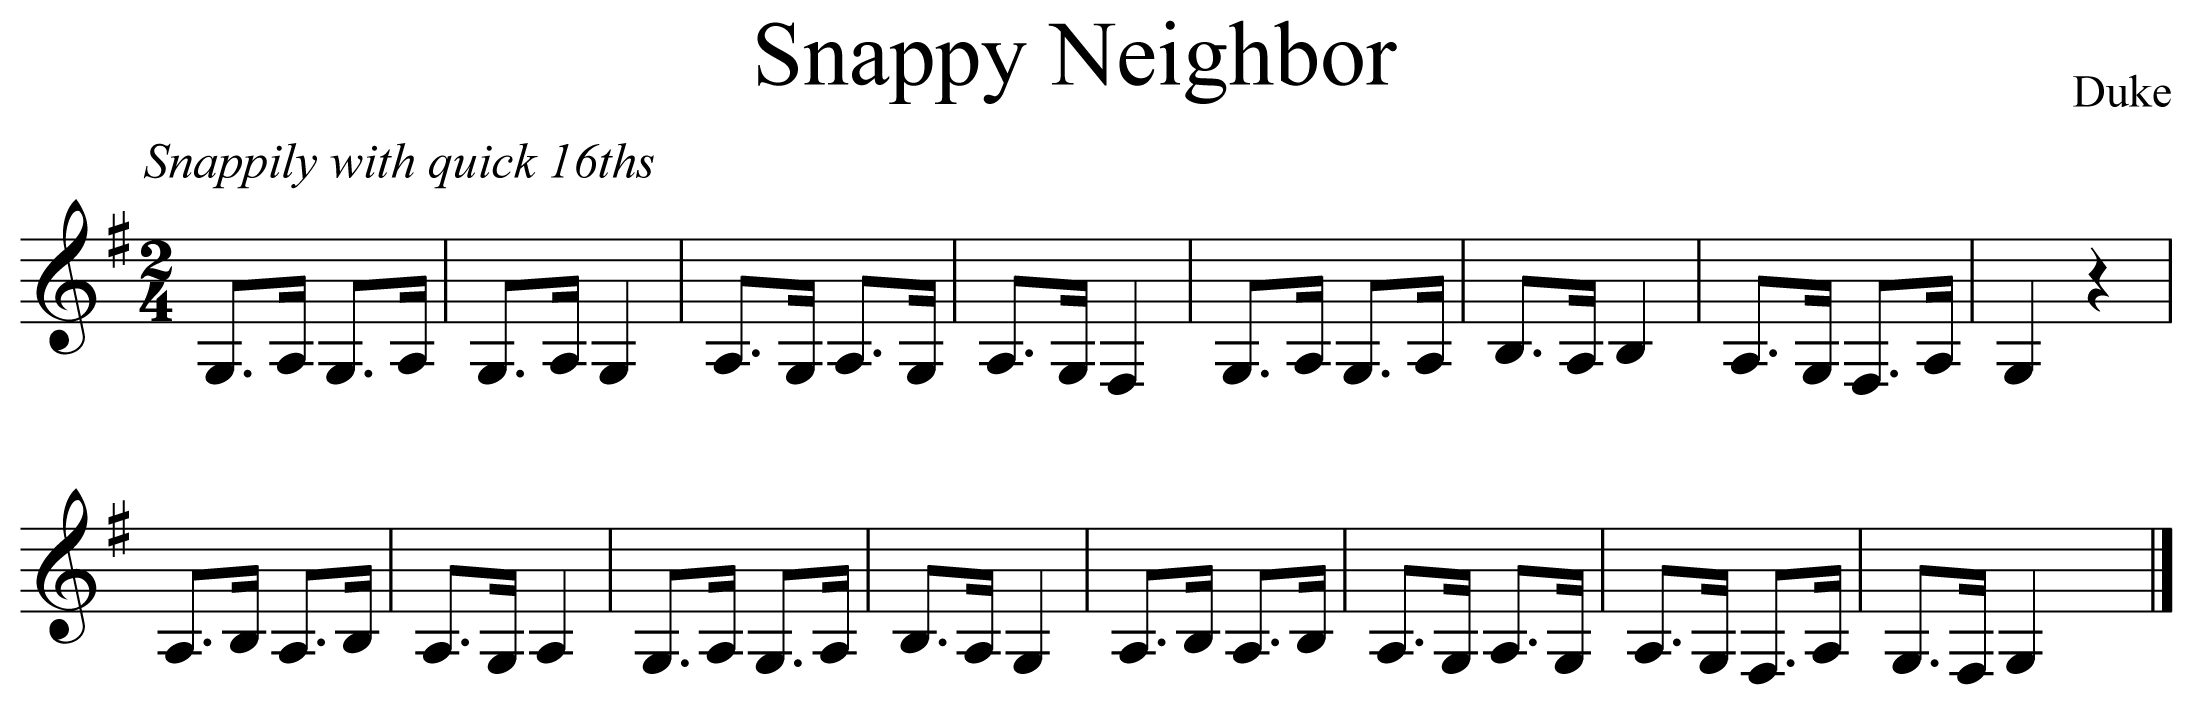 Snappy Neighbor Music Notation Clarinet